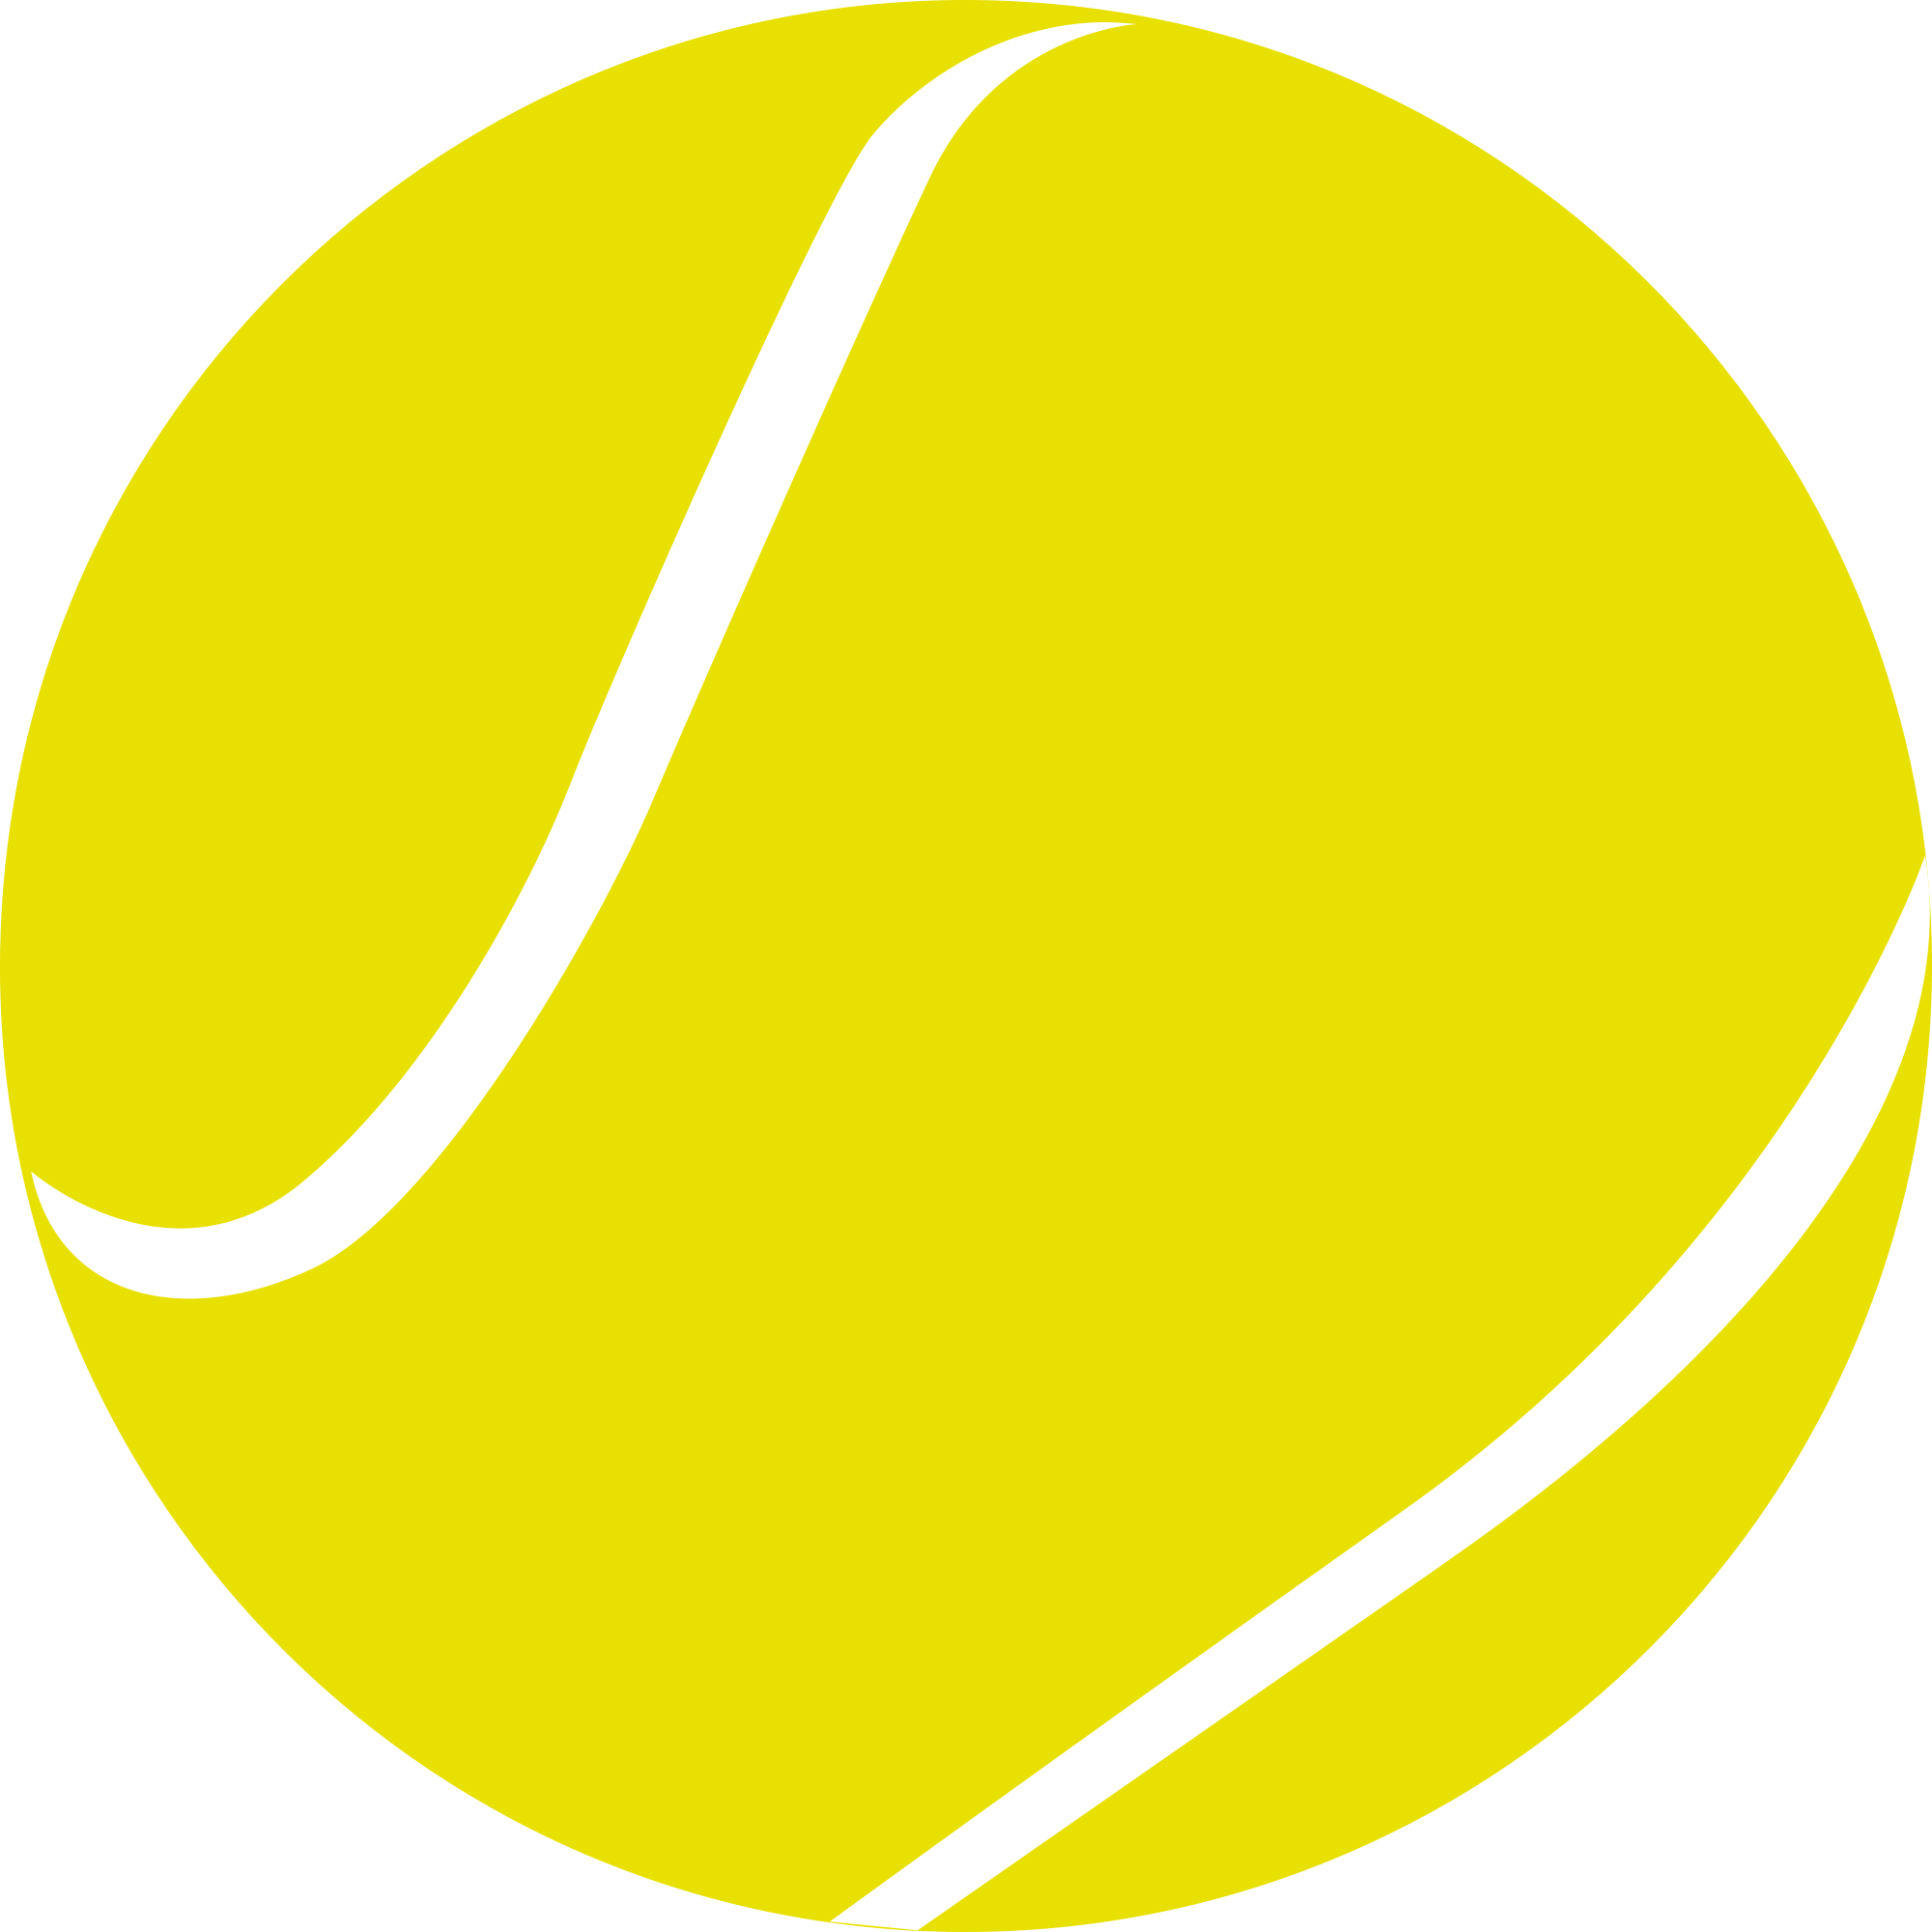 Illustration of a tennis ball